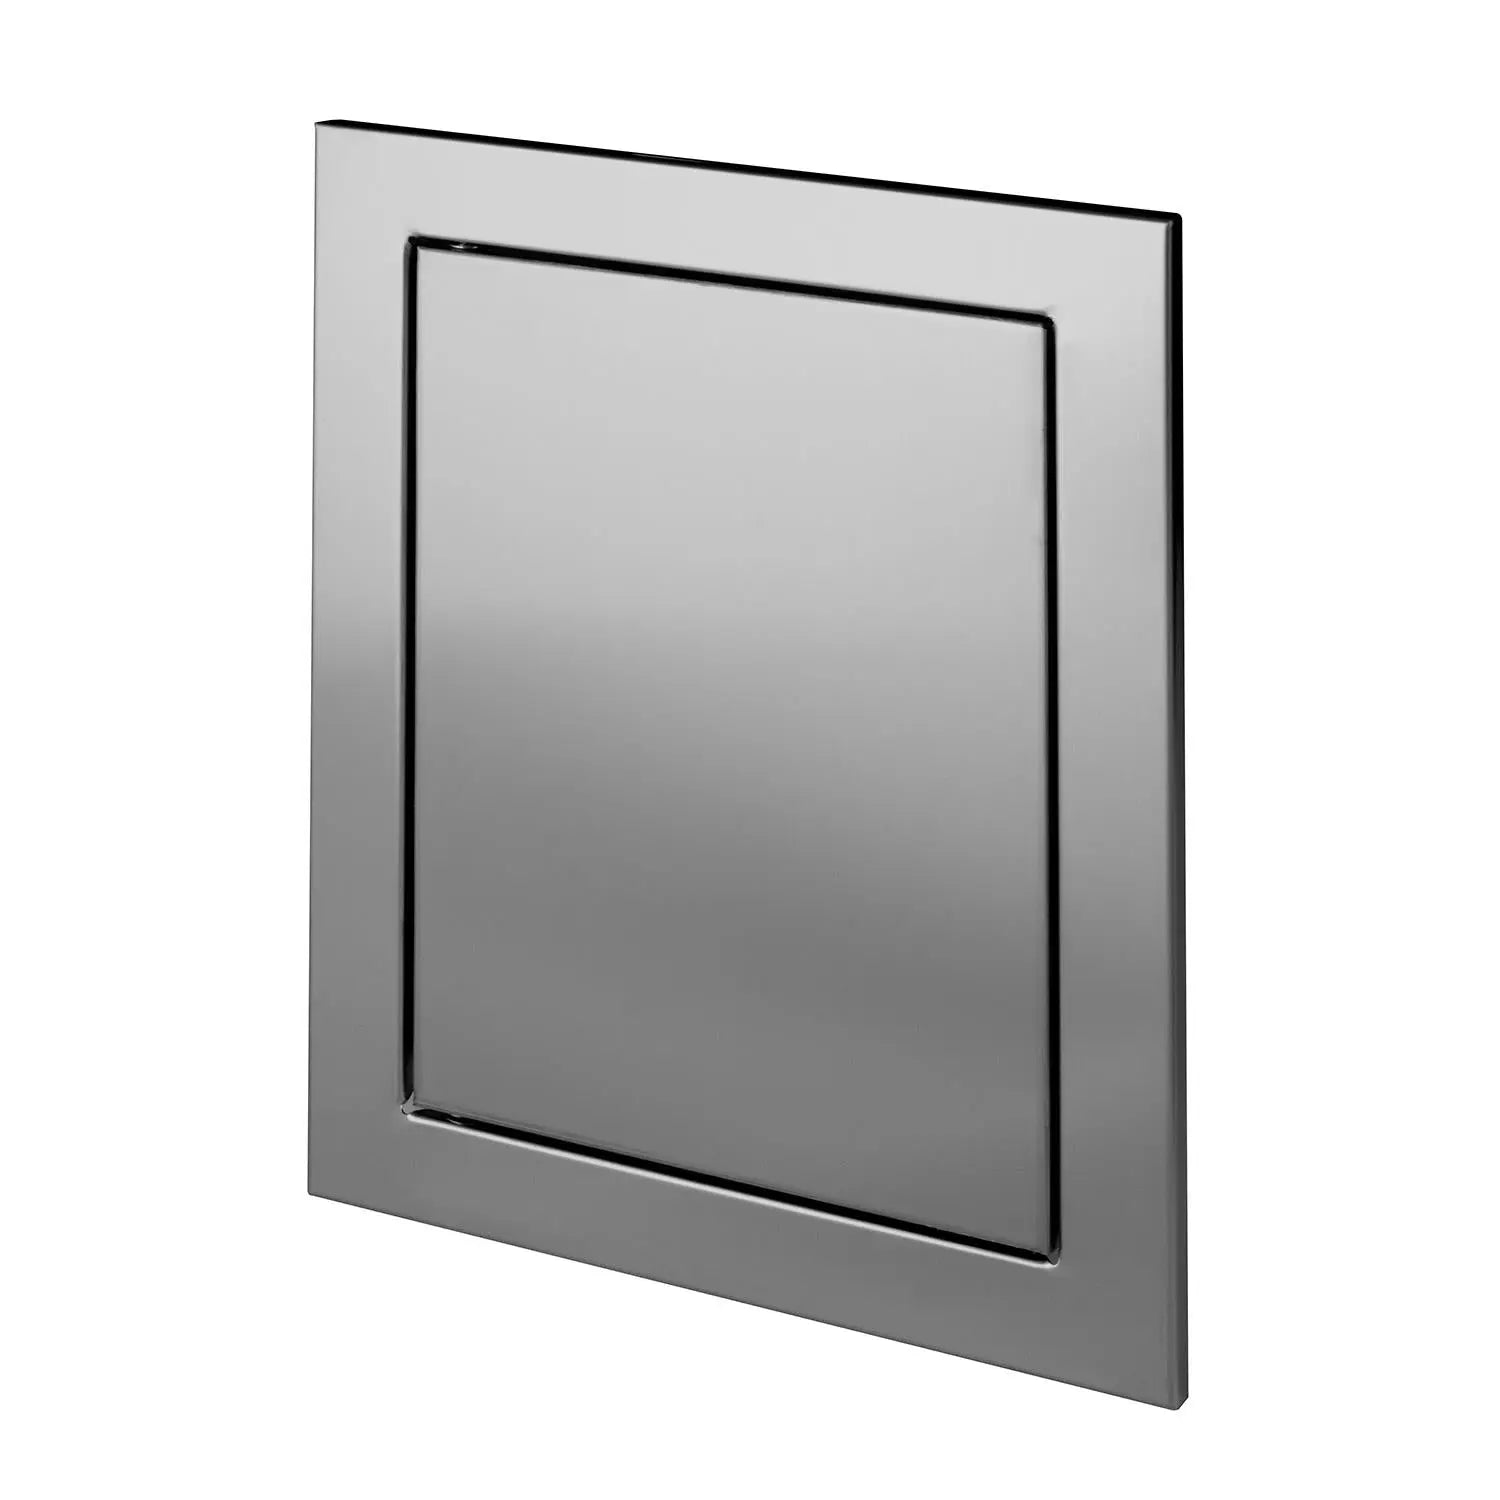 Access Panel Stainless Steel Inspection Door Revision Inspection Access Panels